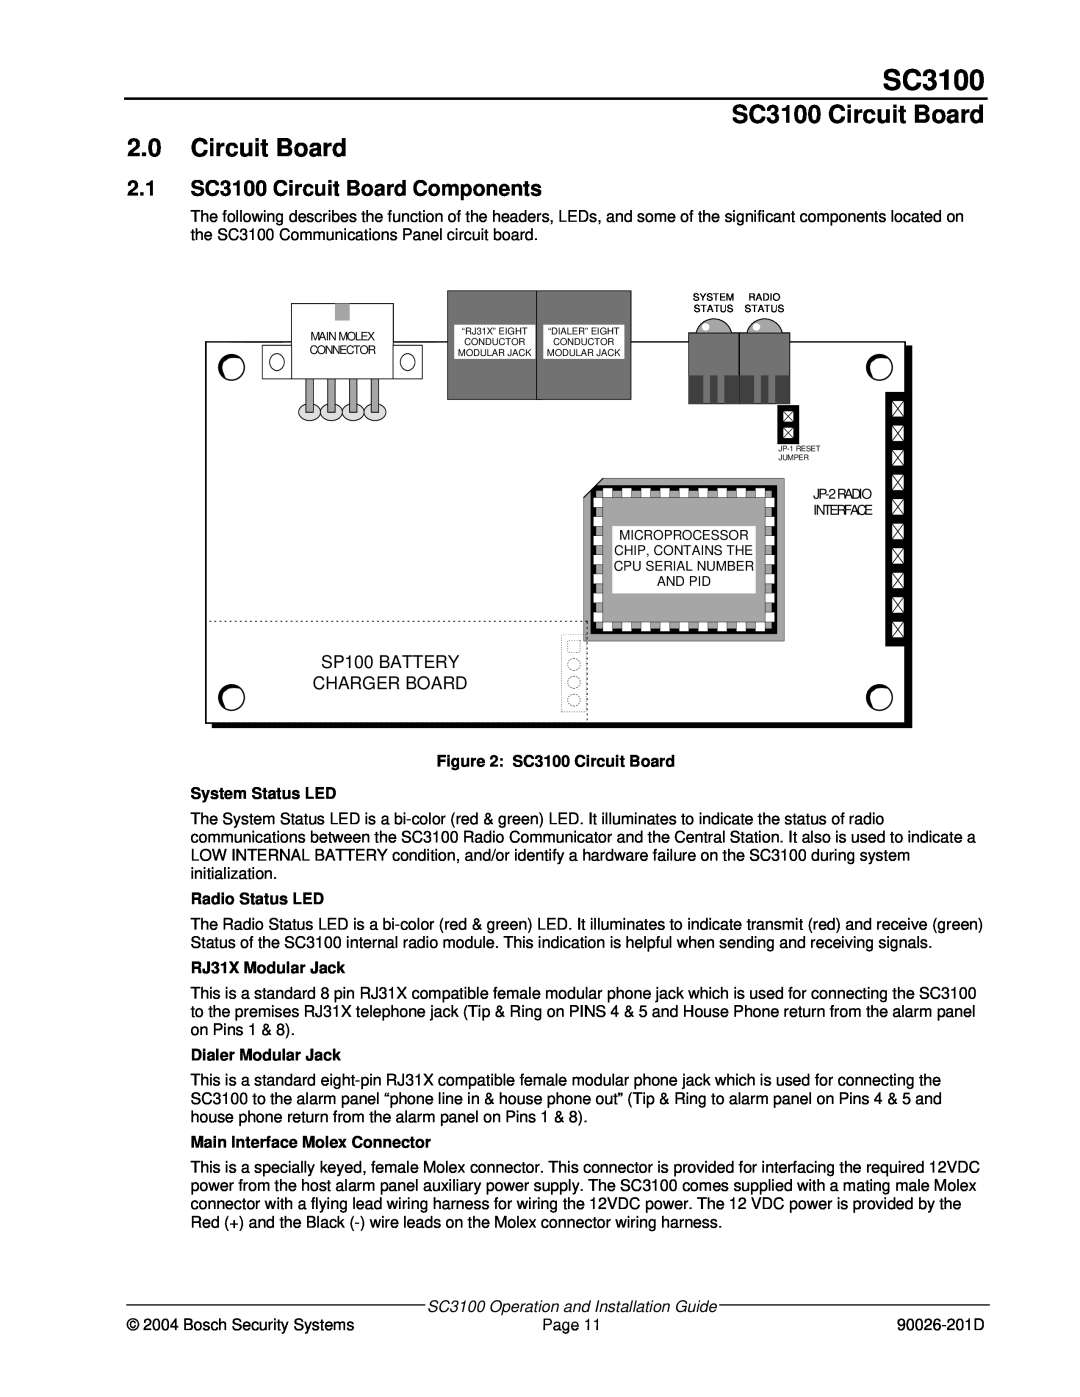 Bosch Appliances manual SC3100 Circuit Board 2.0Circuit Board, 2.1SC3100 Circuit Board Components, Radio Status LED 